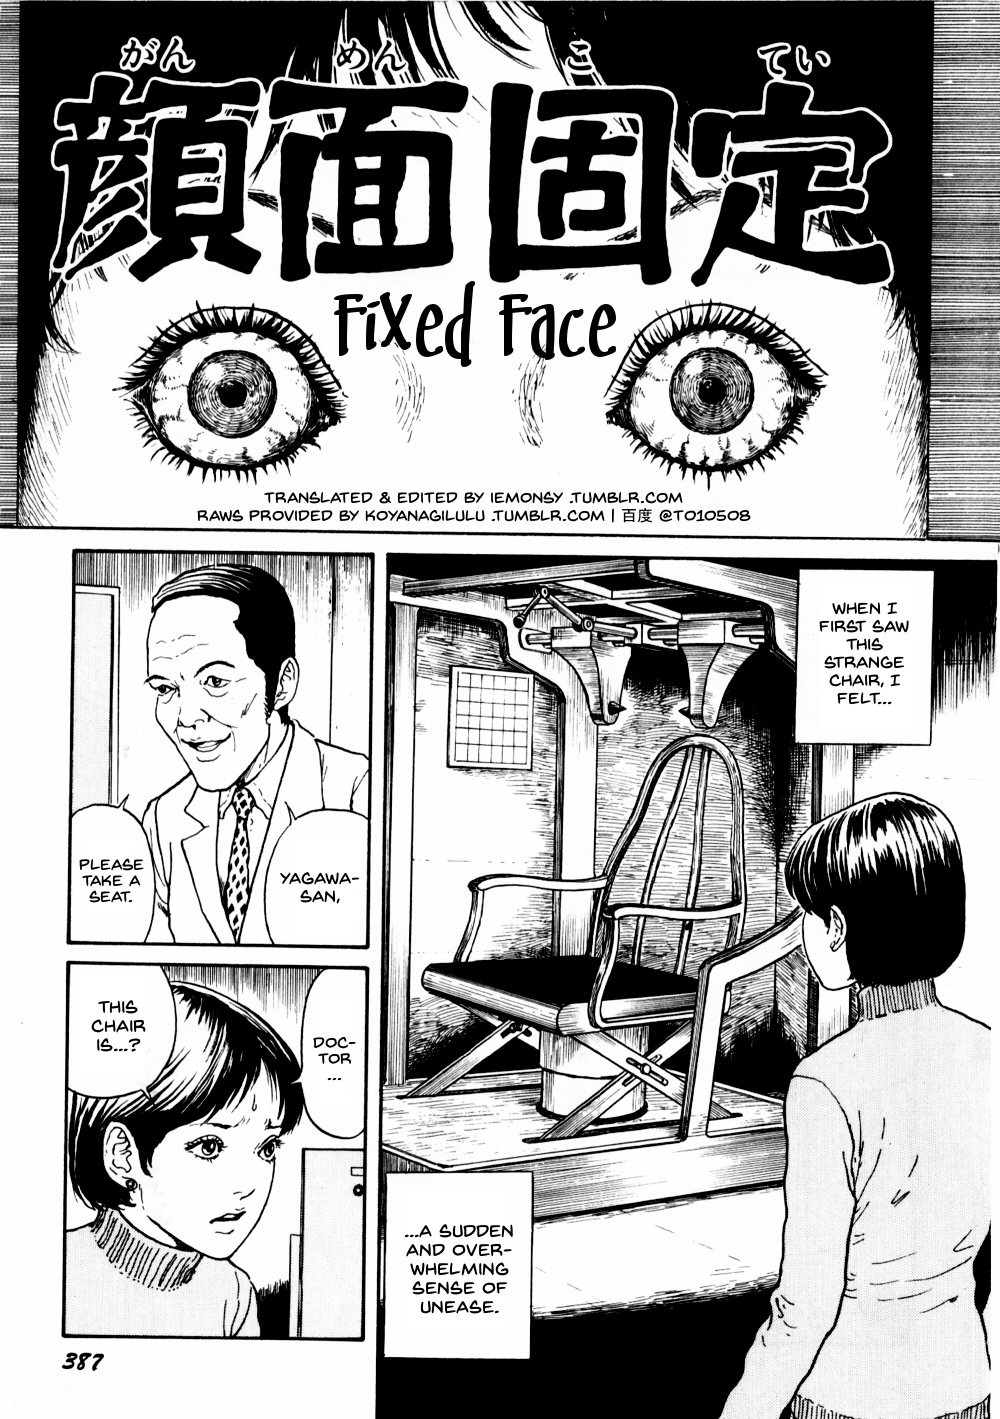 Itou Junji Kyoufu Manga Collection Vol. 16 Ch. 2.1 Fixed Face